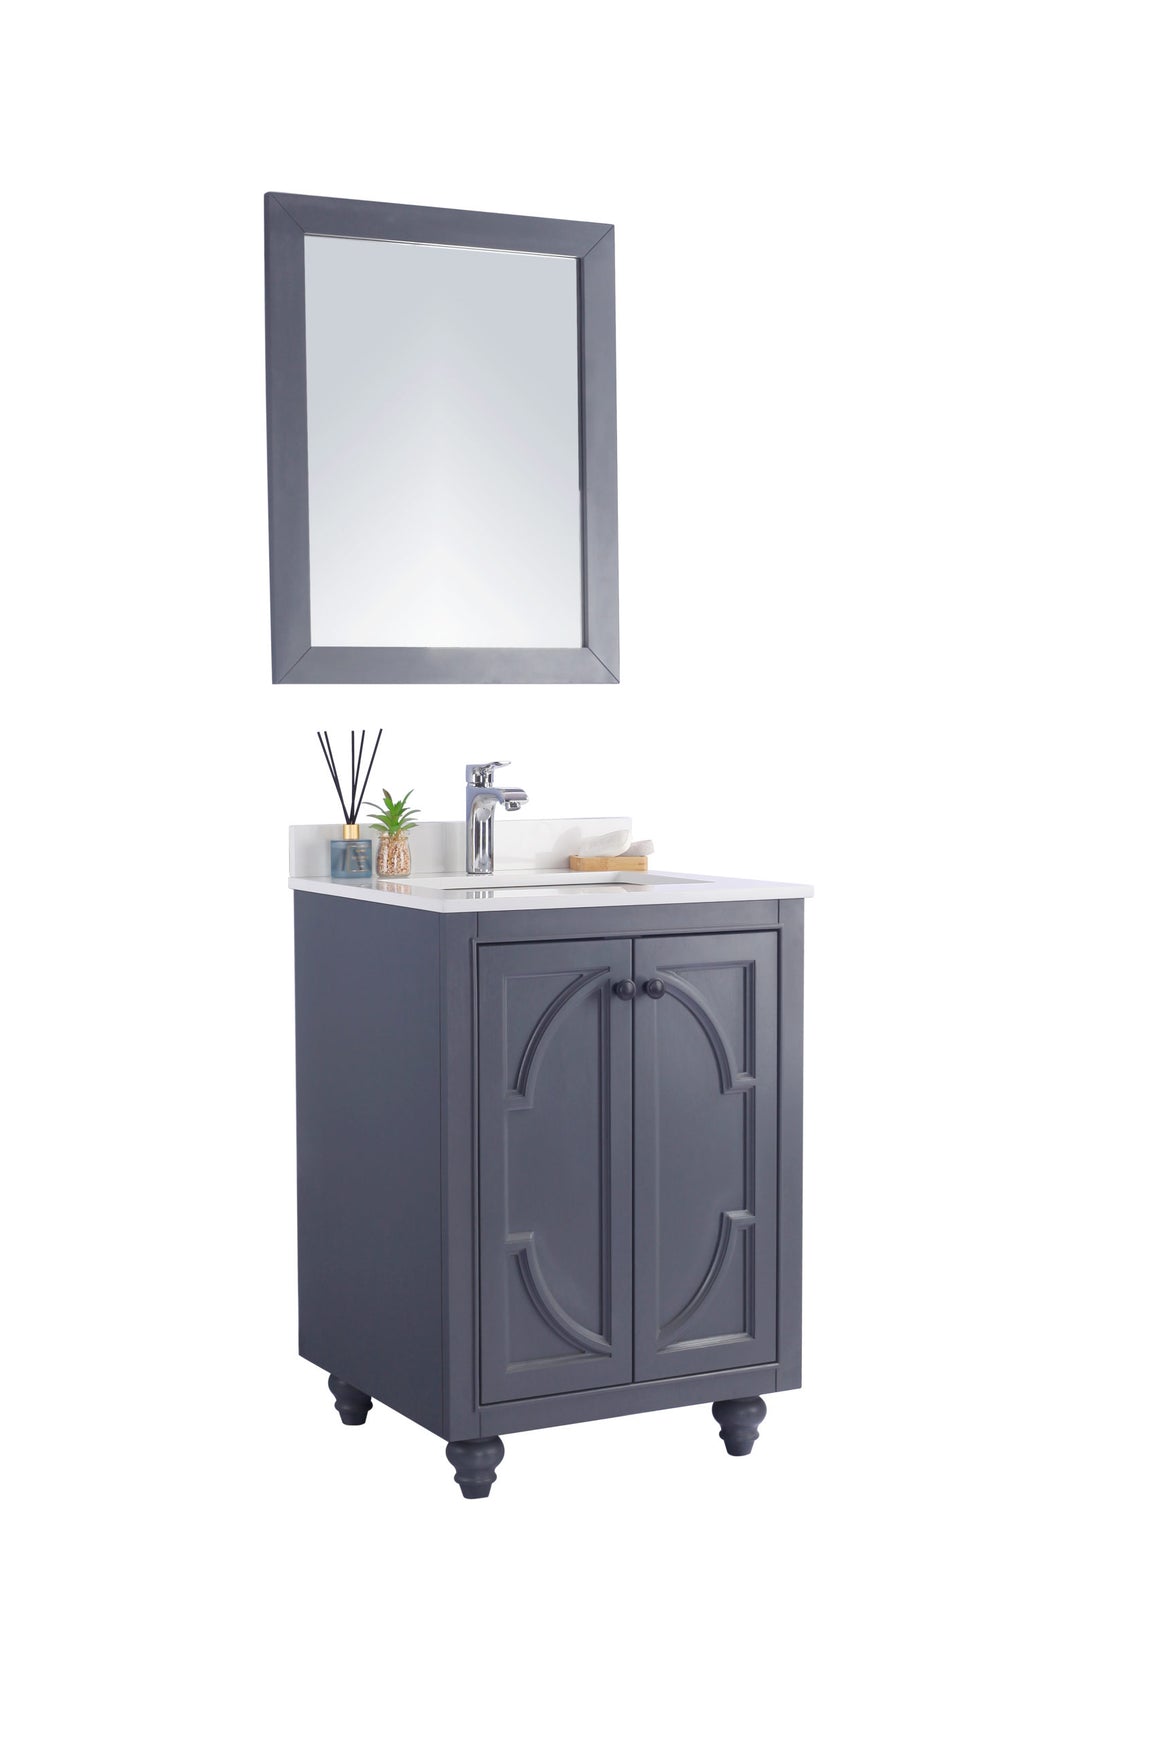 Odyssey - 24 - Maple Grey Cabinet + White Quartz Countertop